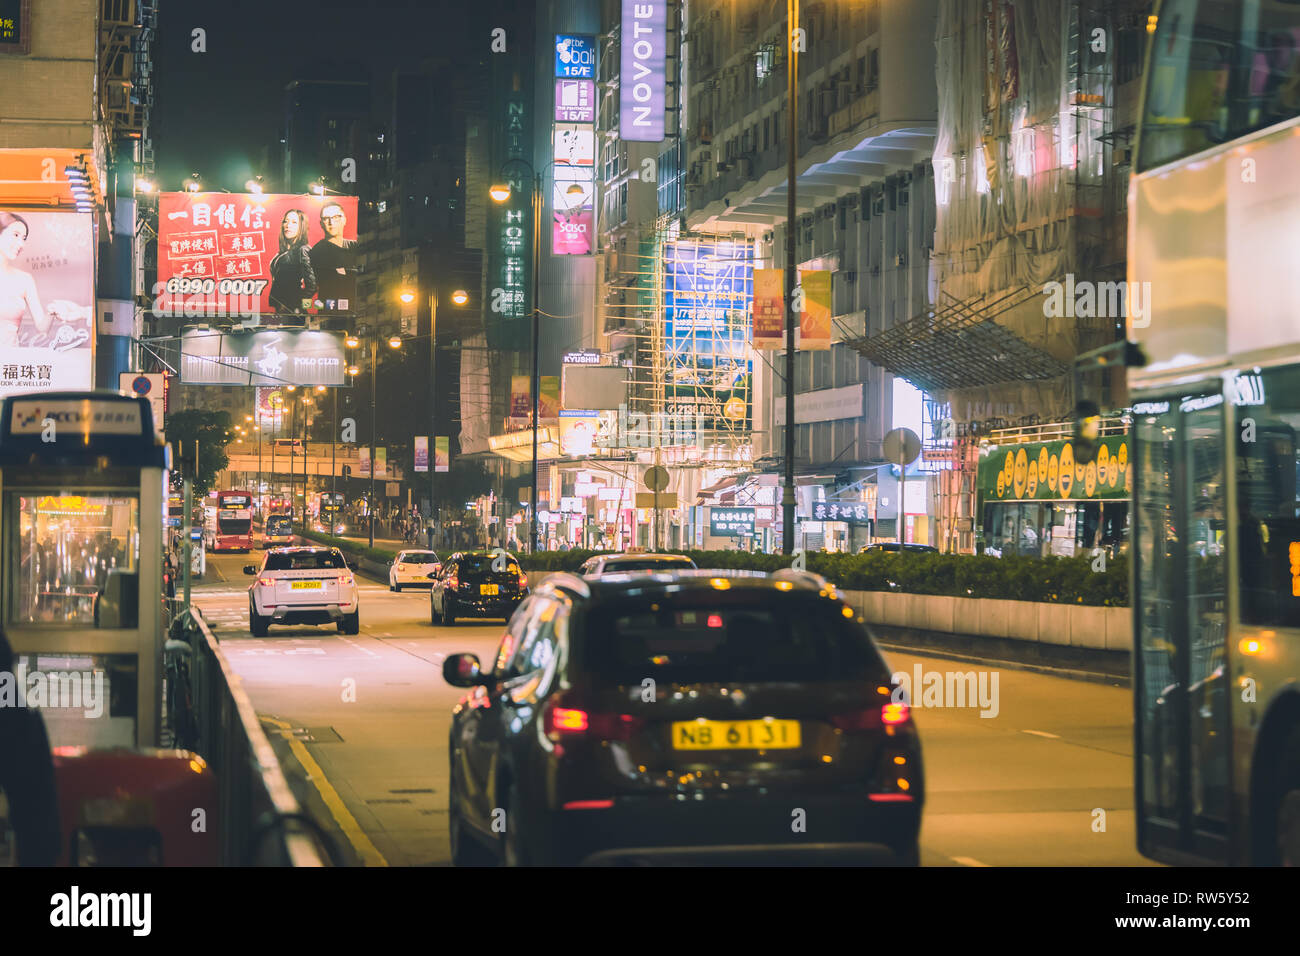 Hong Kong, Hong Kong - October 16, 2018: People are traveling in the night street of Nathan Road. Stock Photo